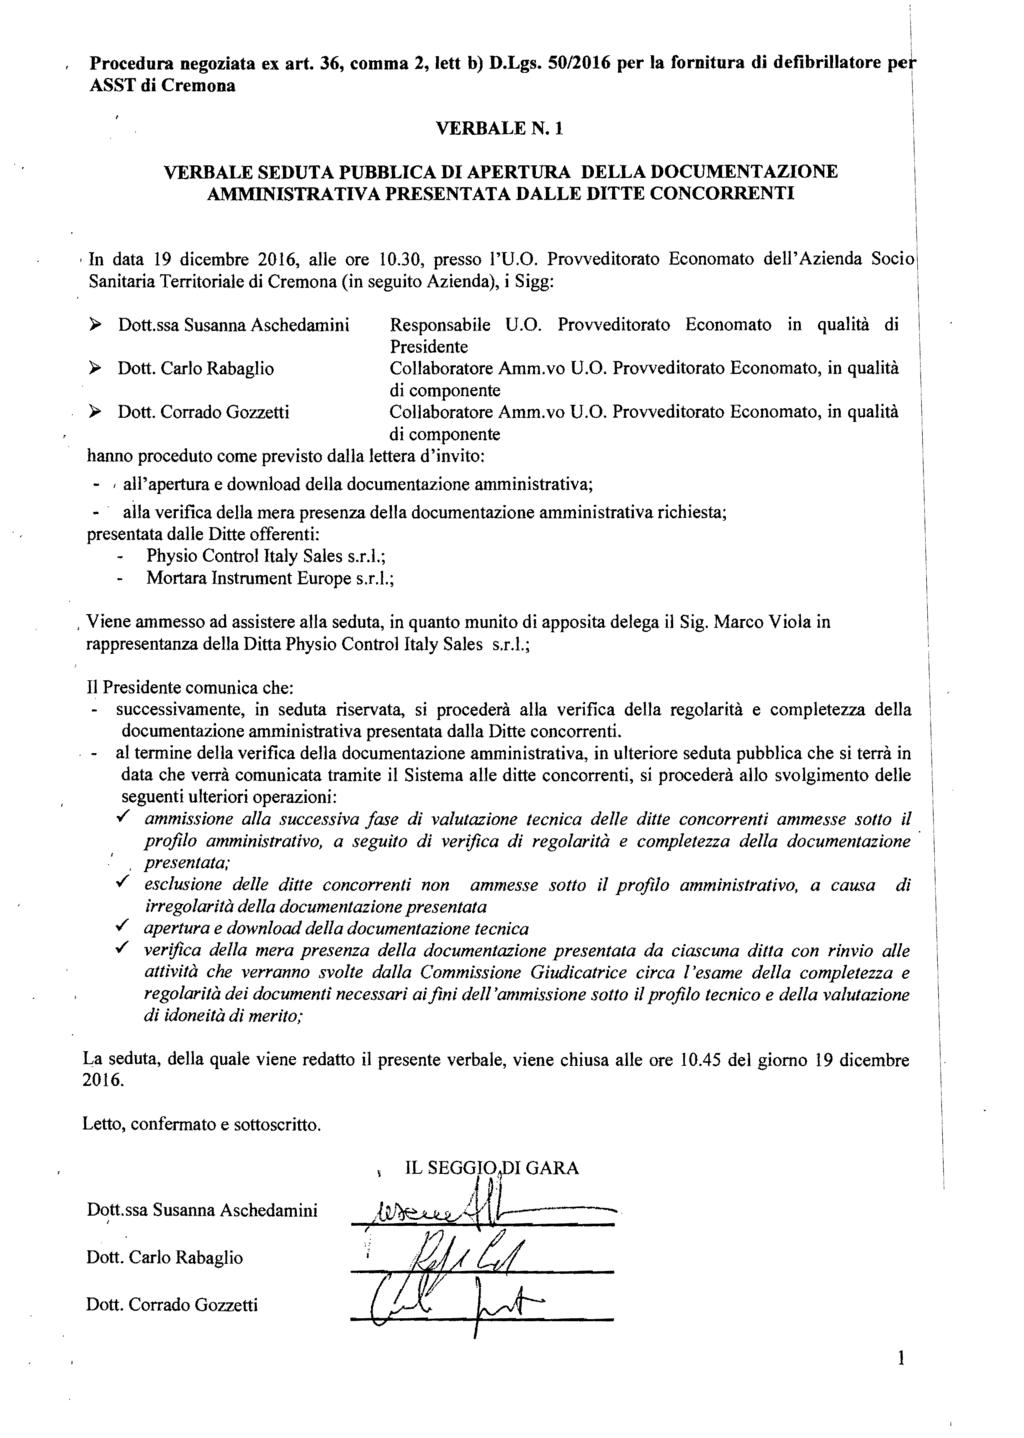 Procedura negoziata ex art. 36, comma 2, lett b) D.Lgs. 50/2016 per la fornitura di defibriuatore pet ASST di Cremona \ VERBALEN.